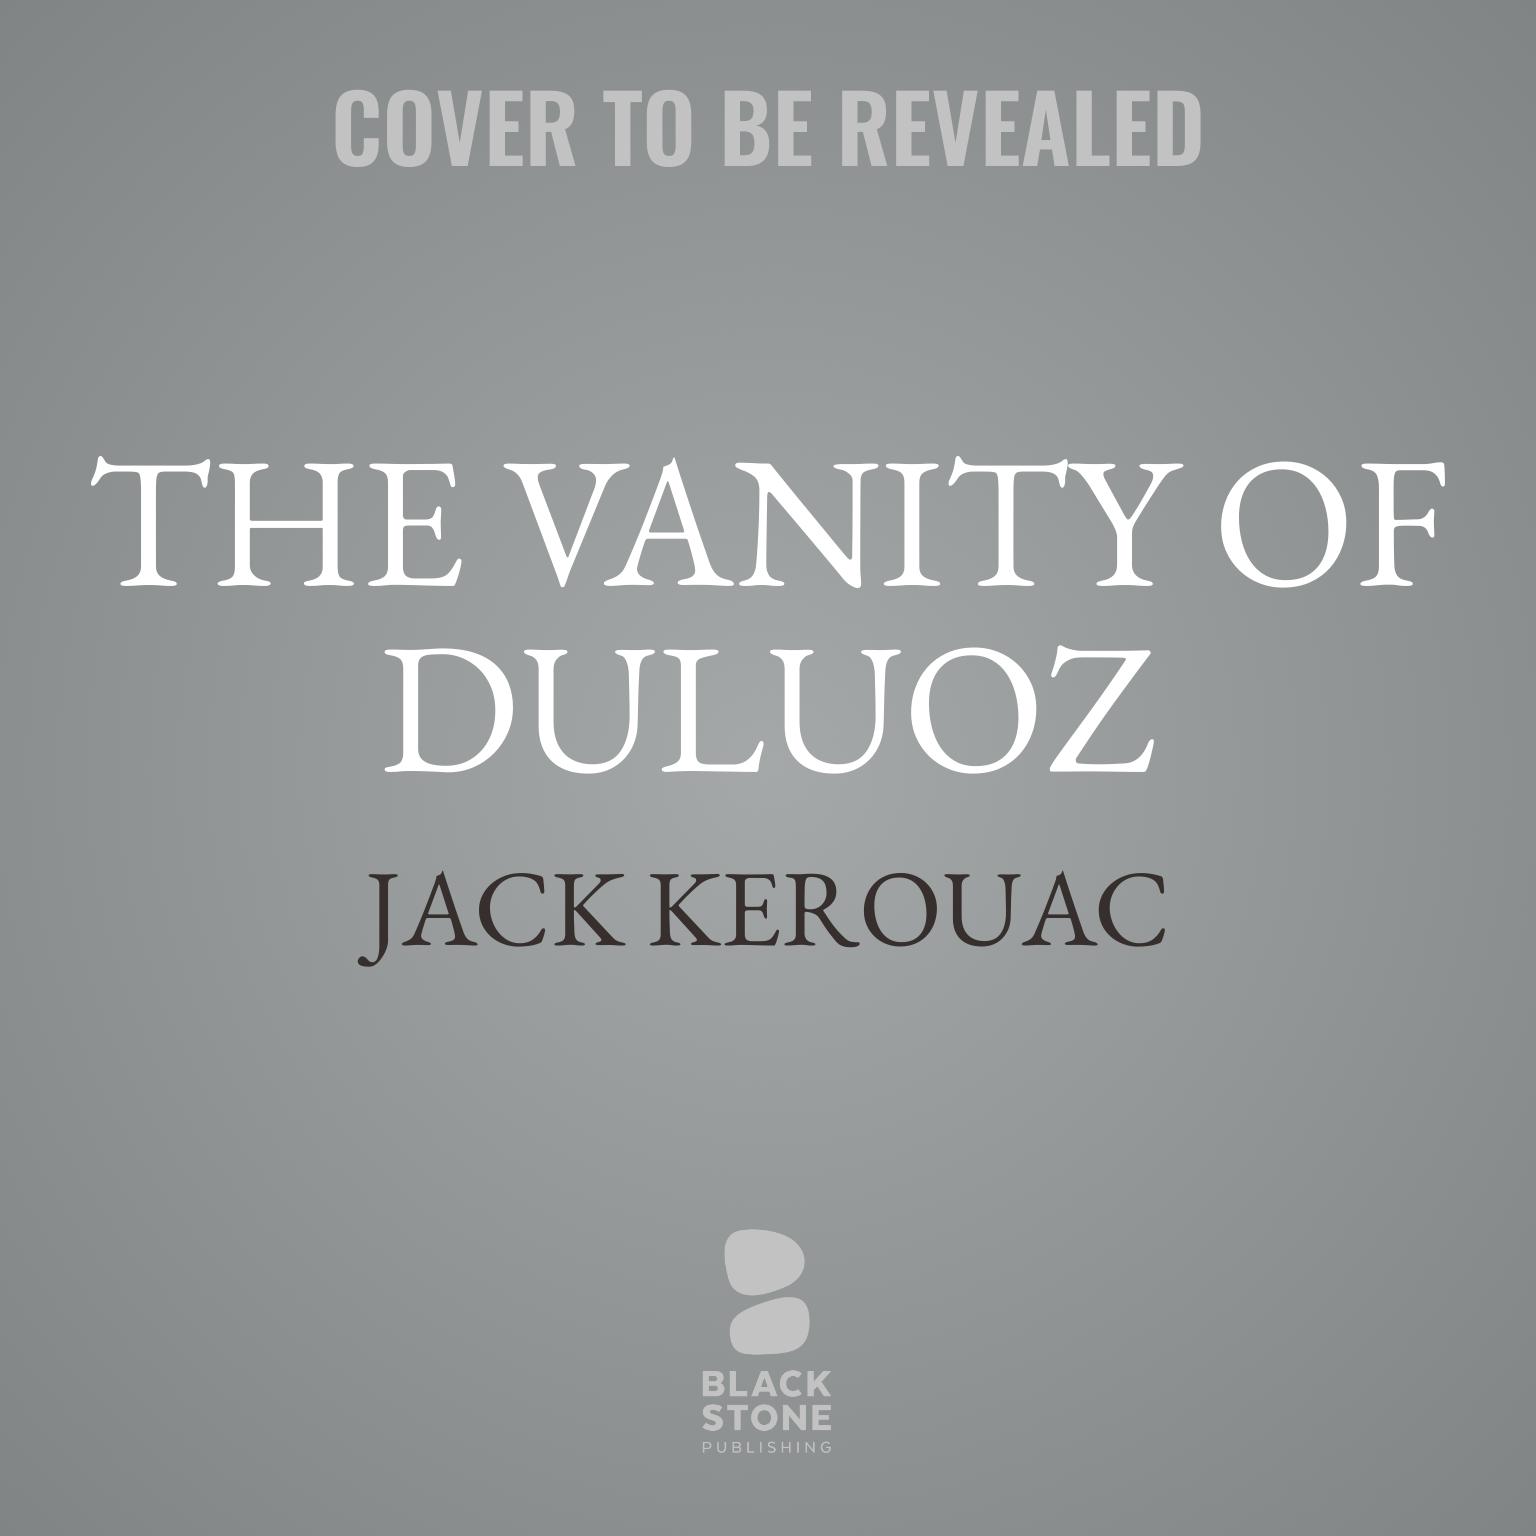 The Vanity of Duluoz: An Adventurous Education, 1935–46 Audiobook, by Jack Kerouac